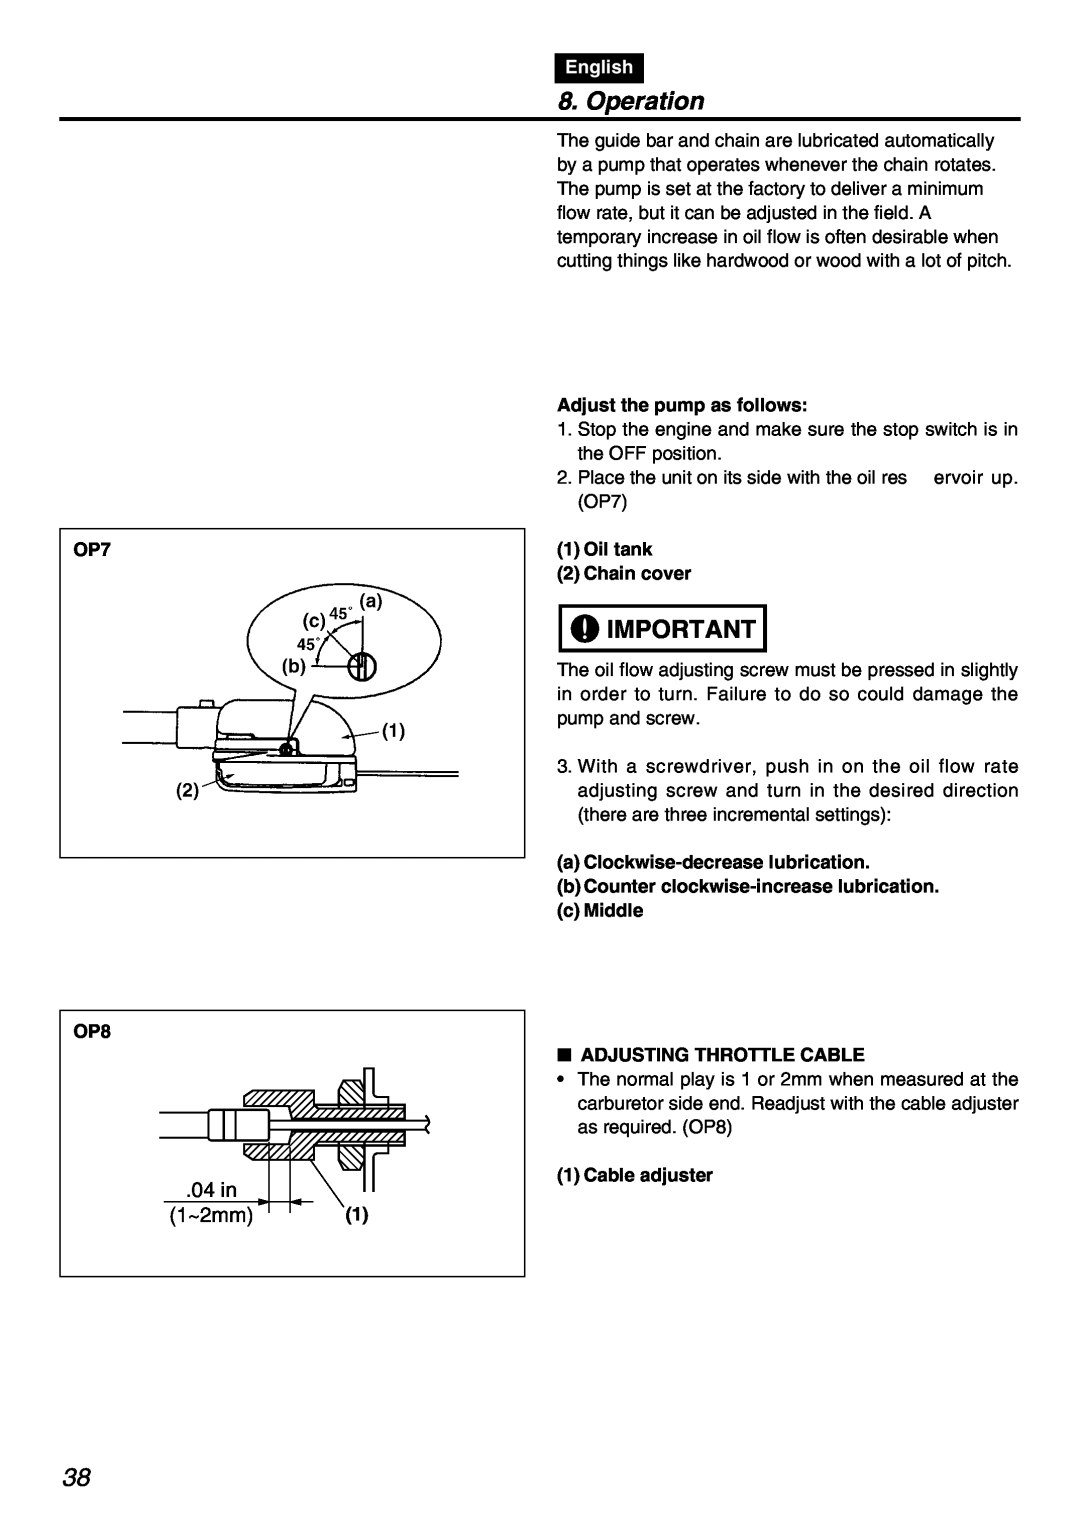 Zenoah PSZ2401 manual 04 in 1~2mm, Operation, English, OP7 OP8, Adjust the pump as follows, Oil tank 2 Chain cover 